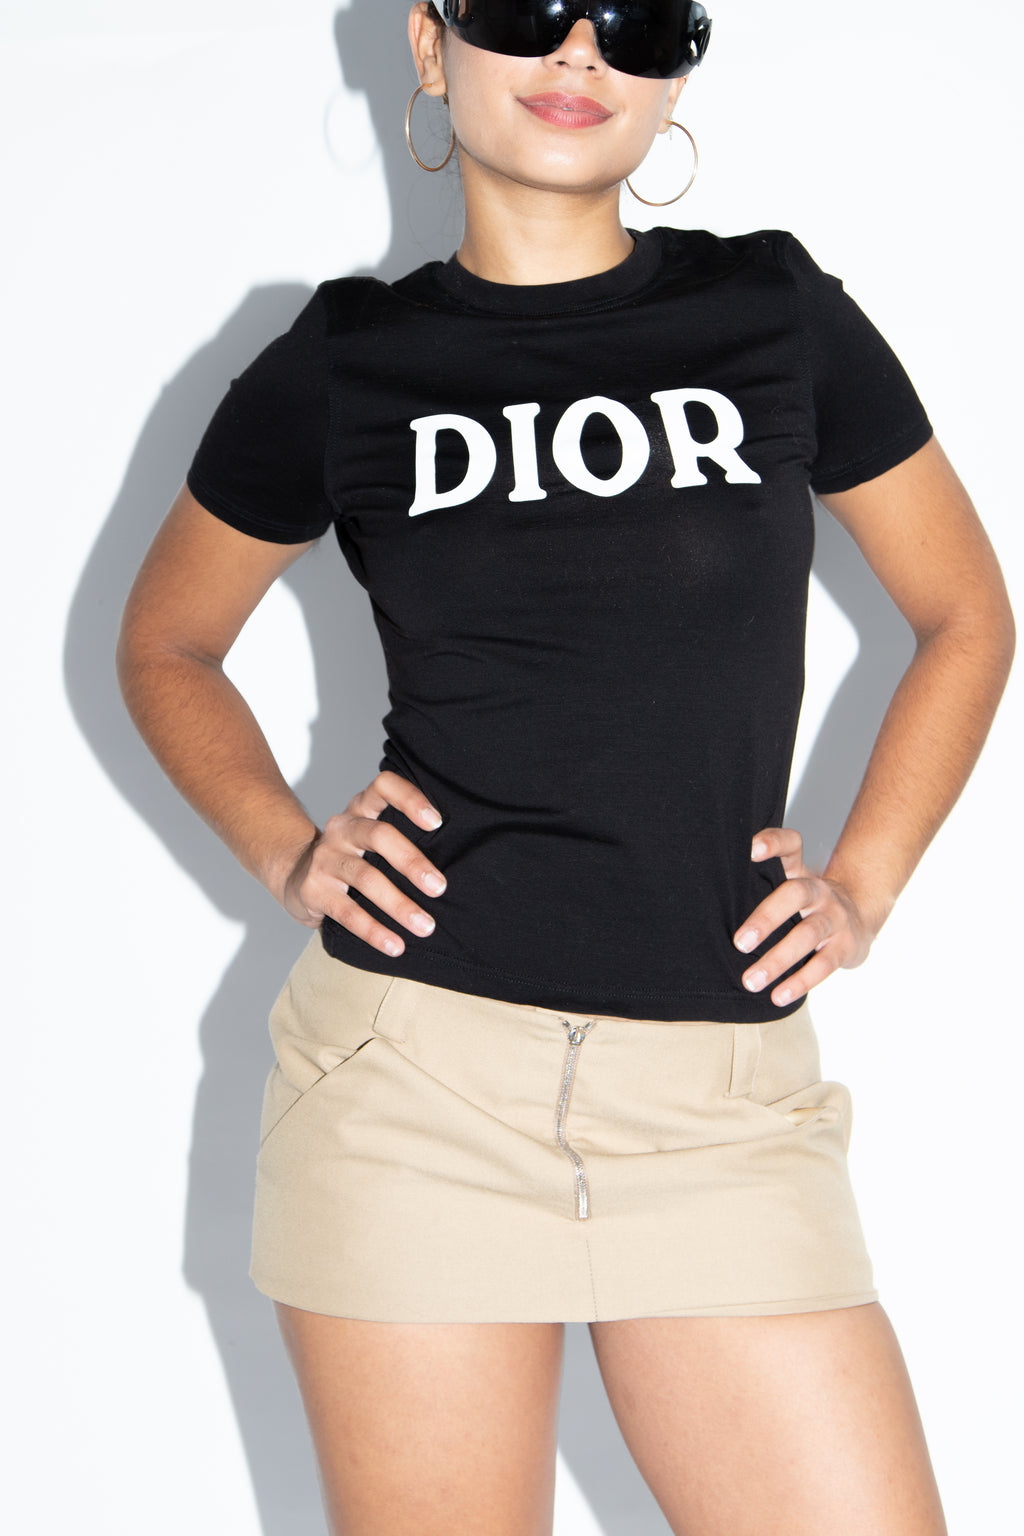 2000s Christian Dior "Dior" Black T-shirt (UK 8)